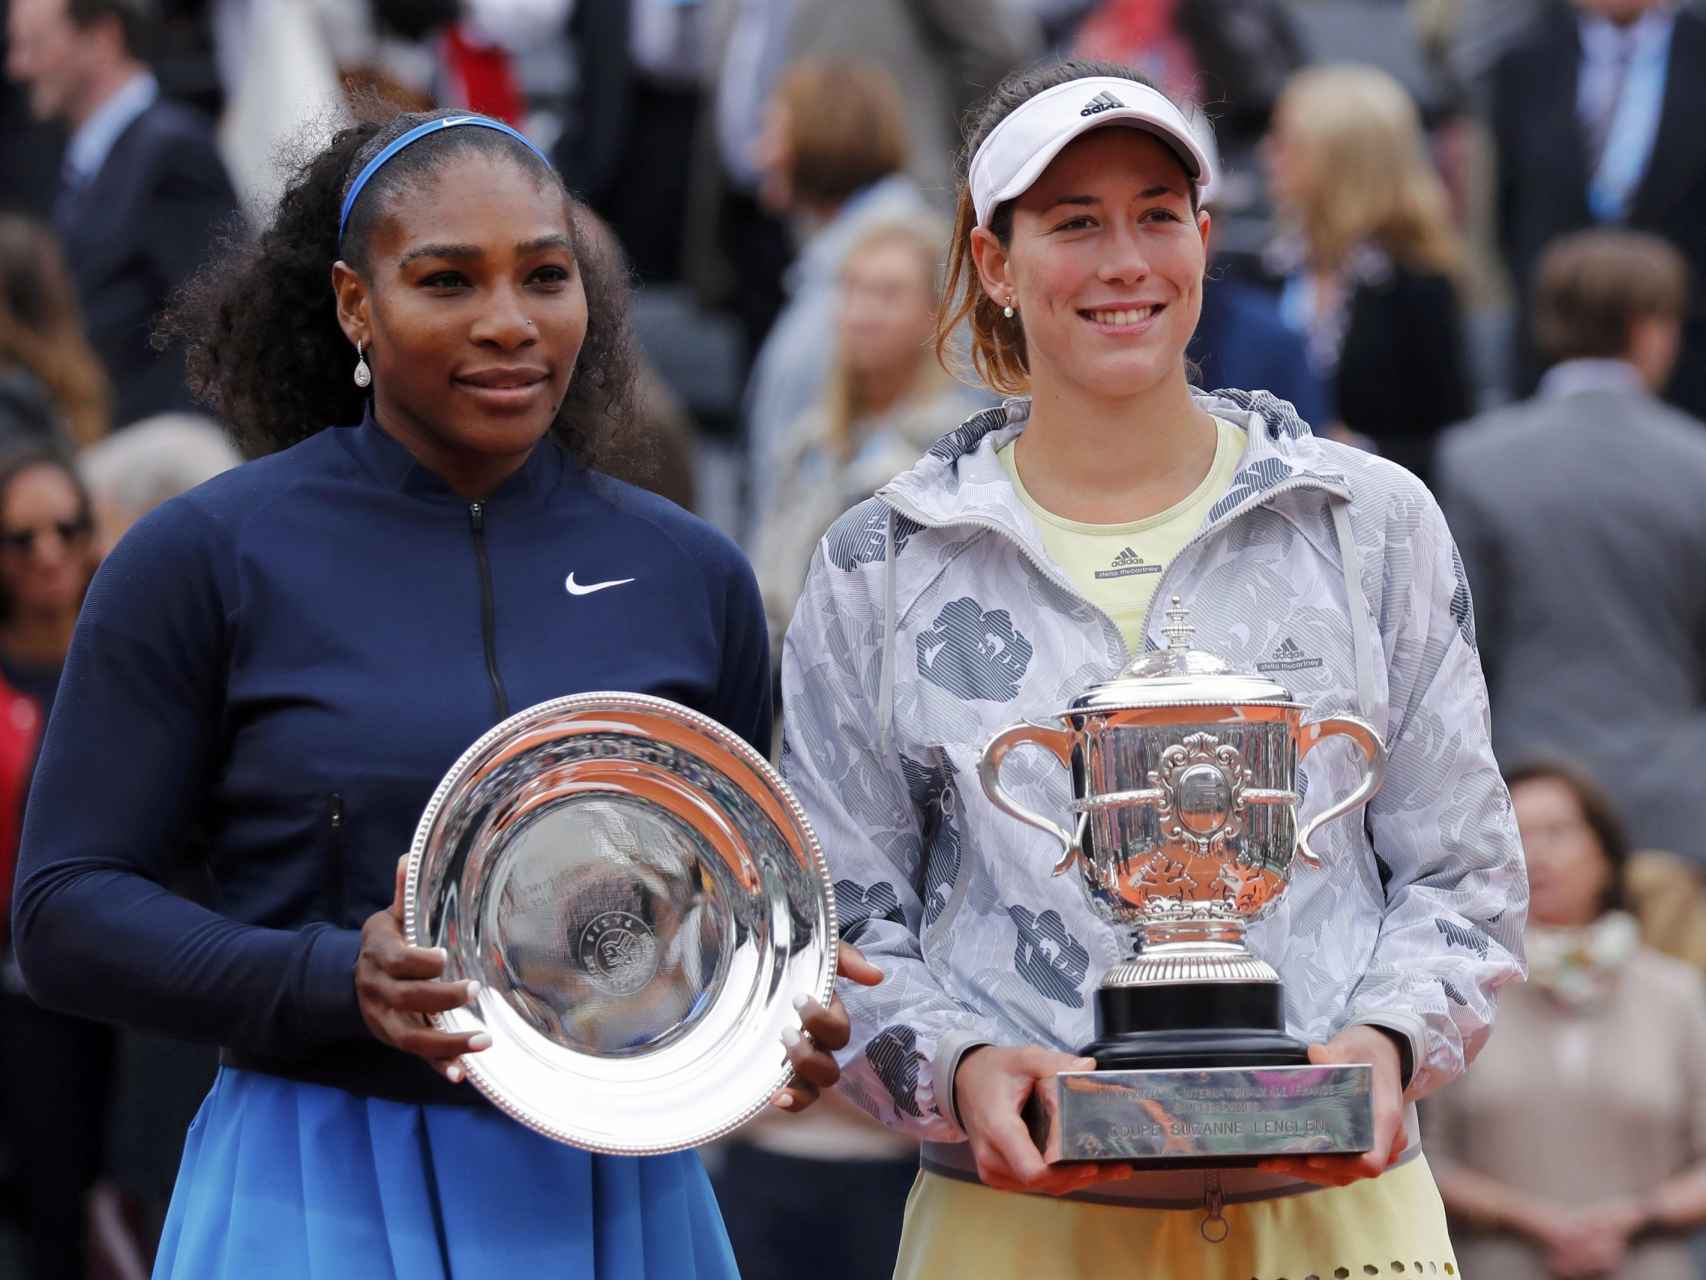 Garbiñe posa junto a Serena, su rival.